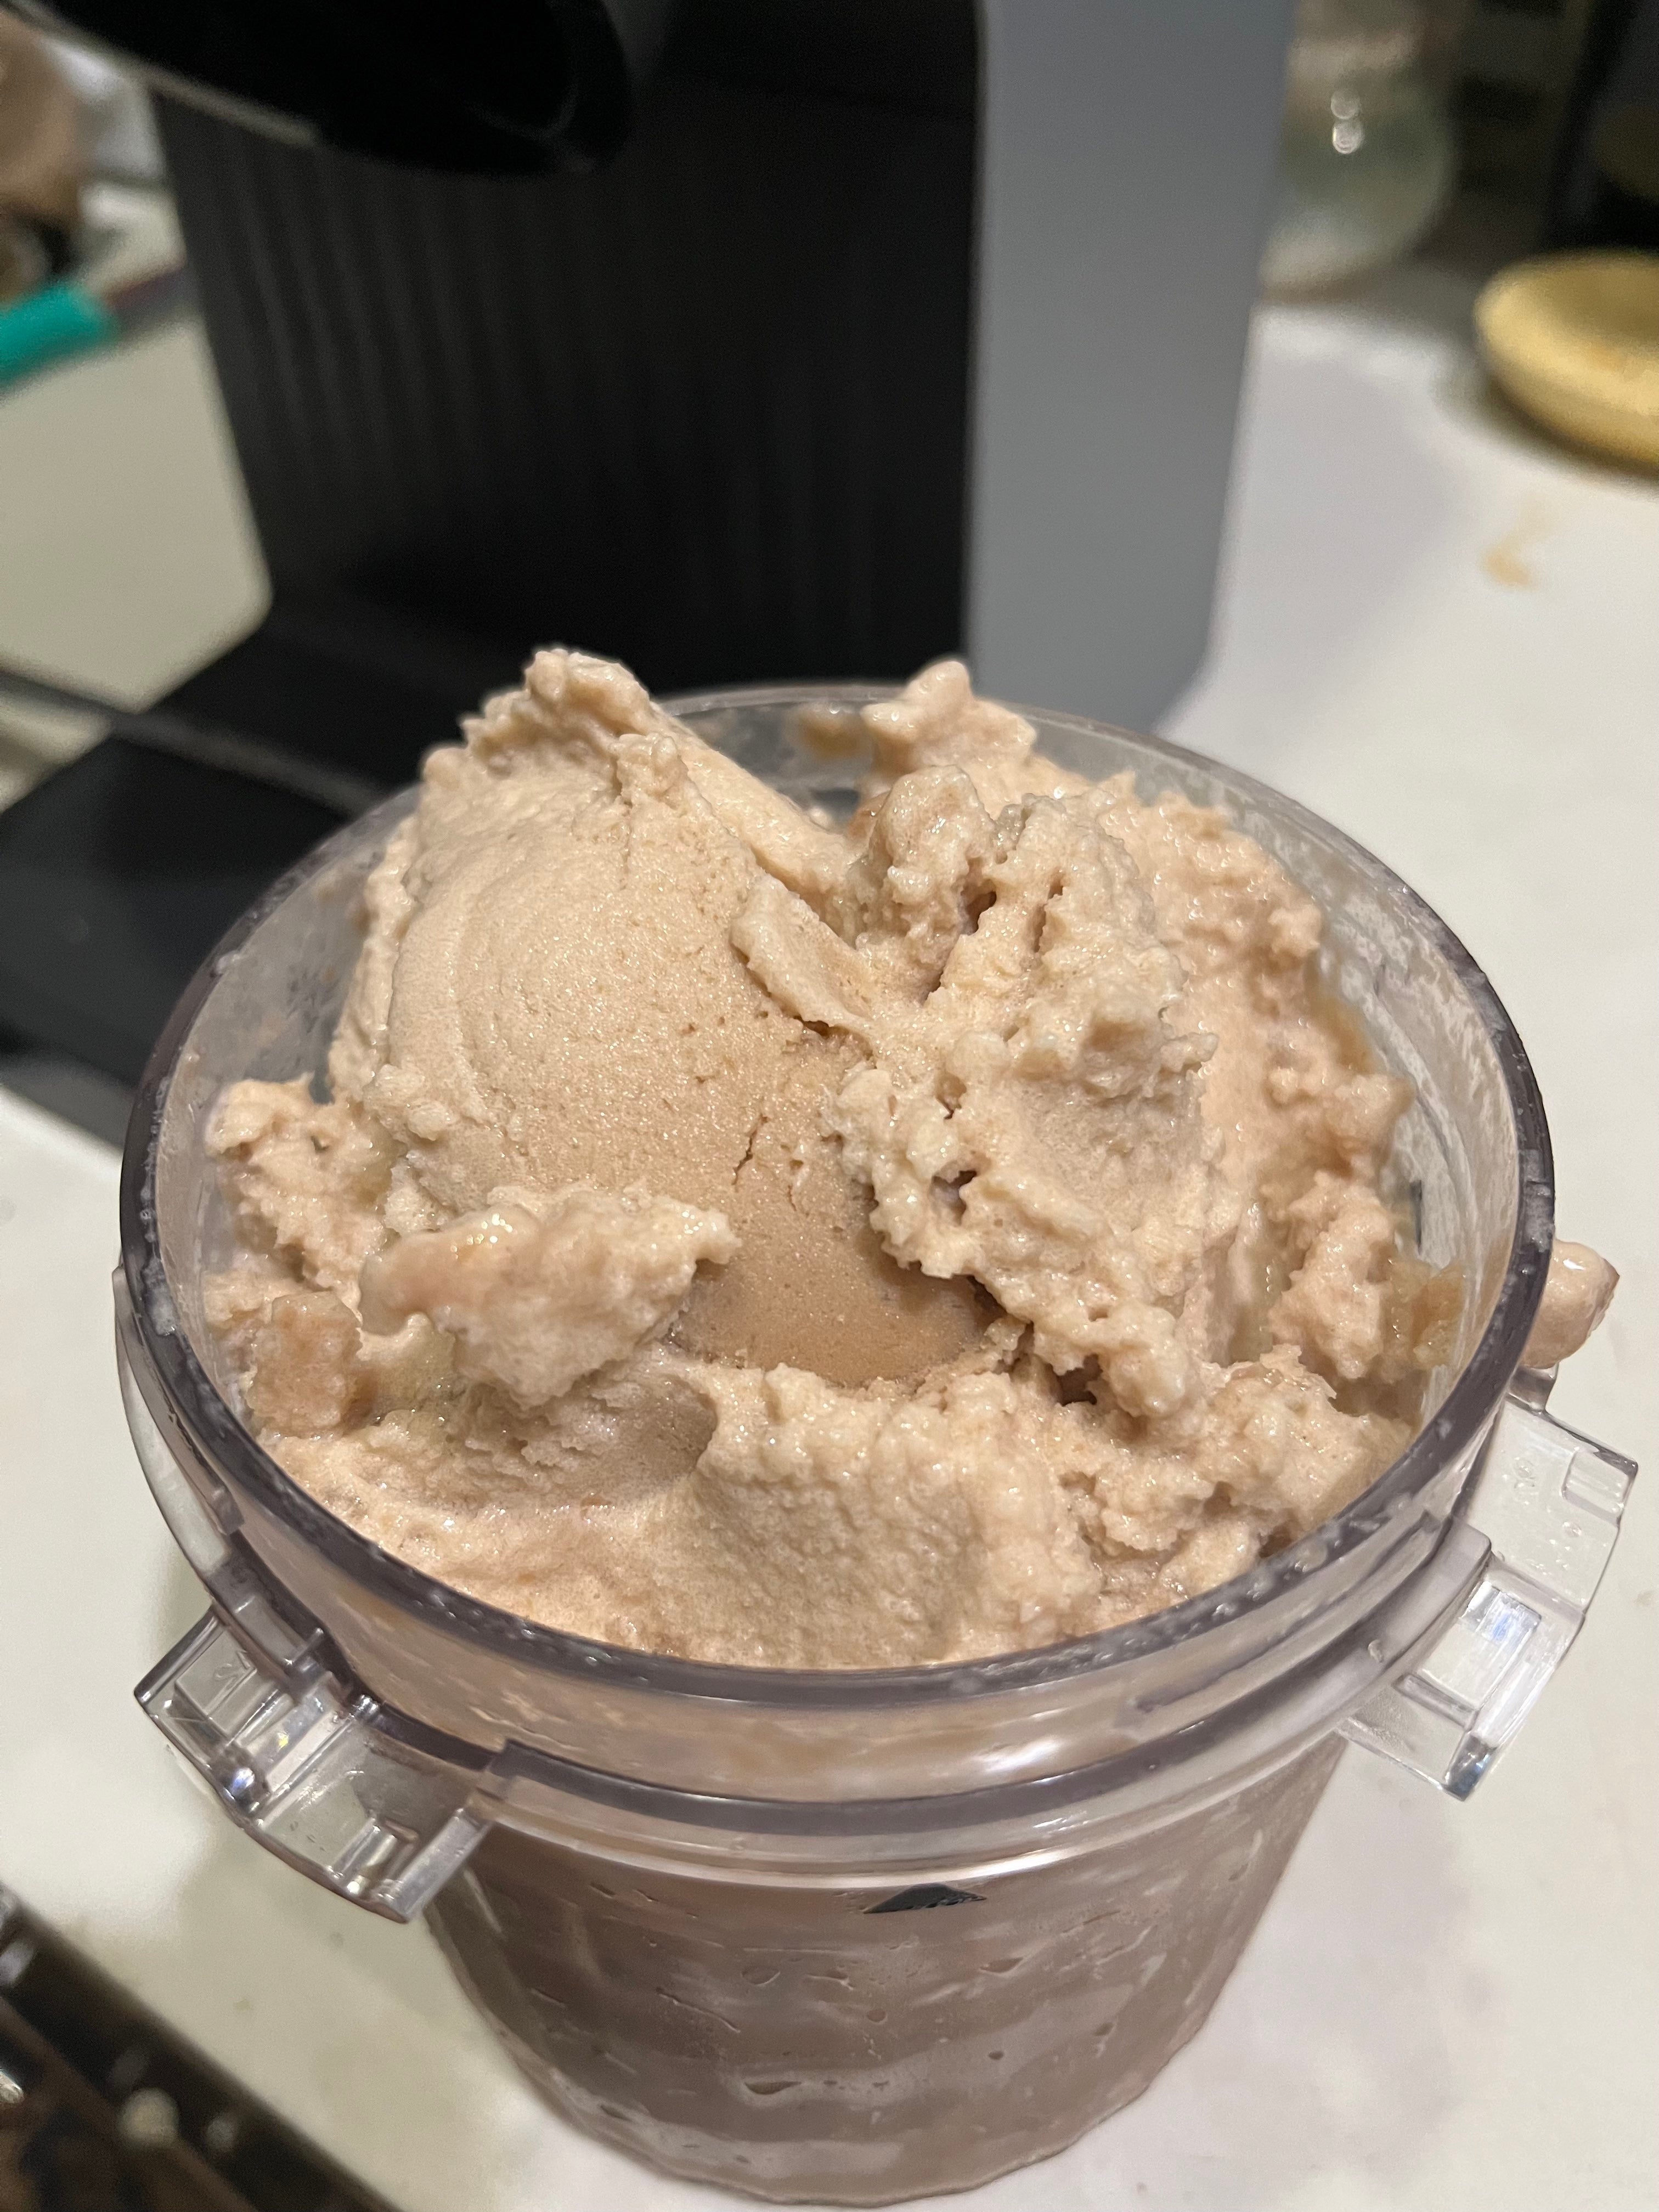 Ninja Creami Review: We Tried the TikTok-Famous Ice Cream Maker